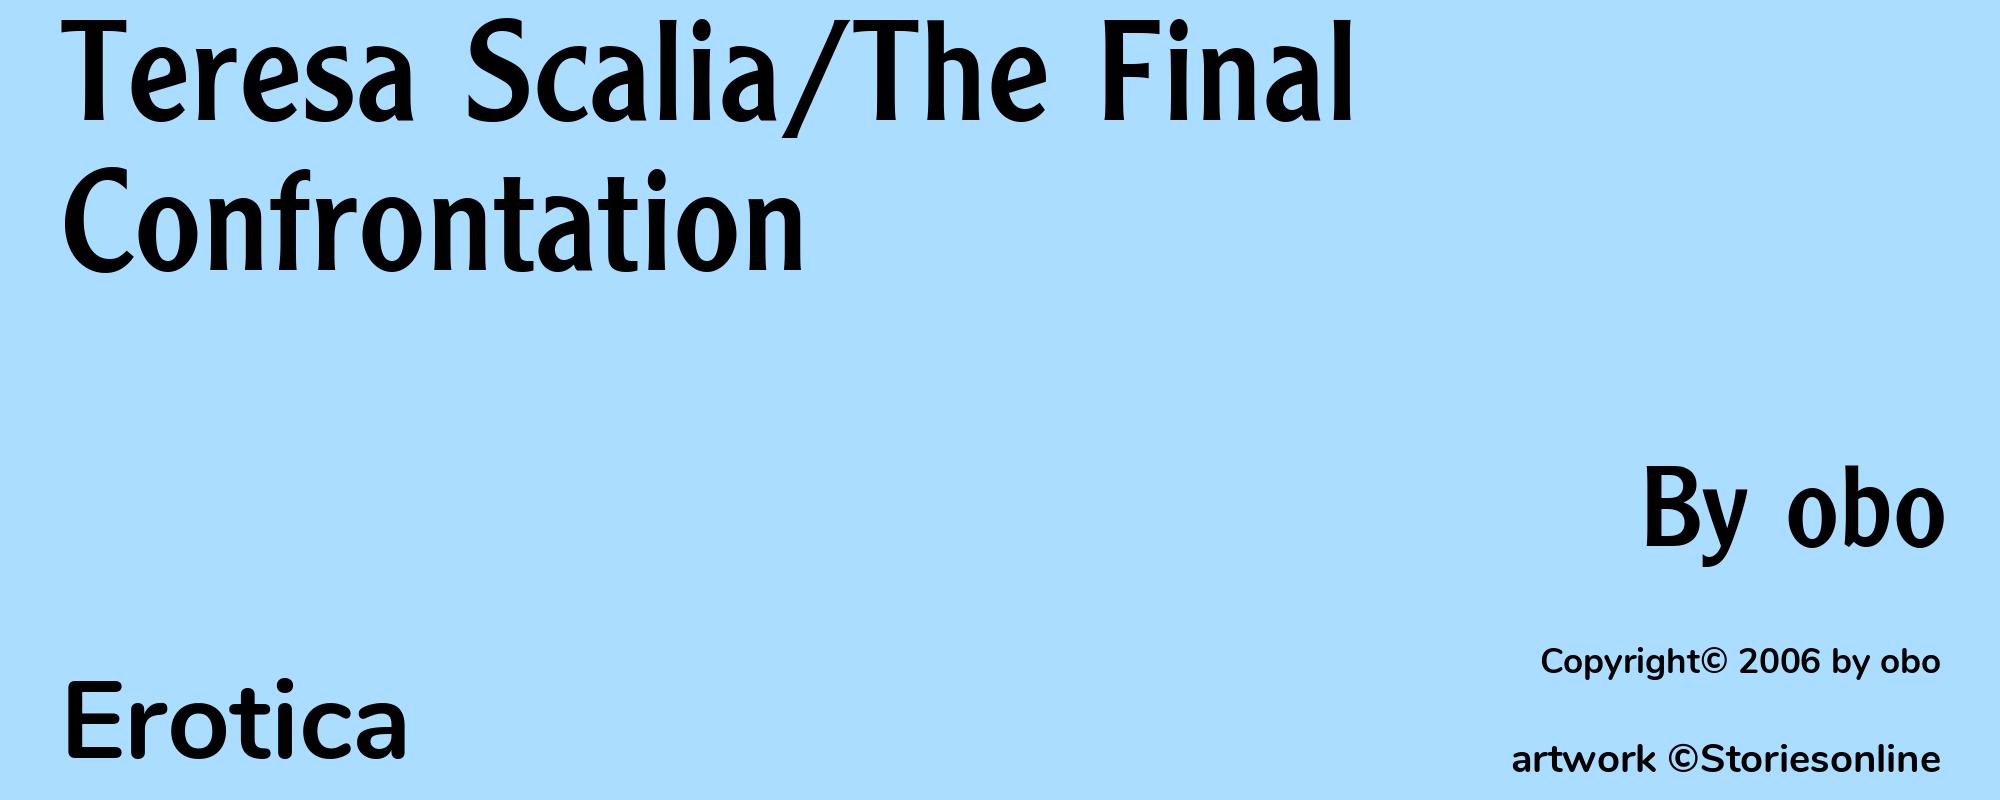 Teresa Scalia/The Final Confrontation - Cover